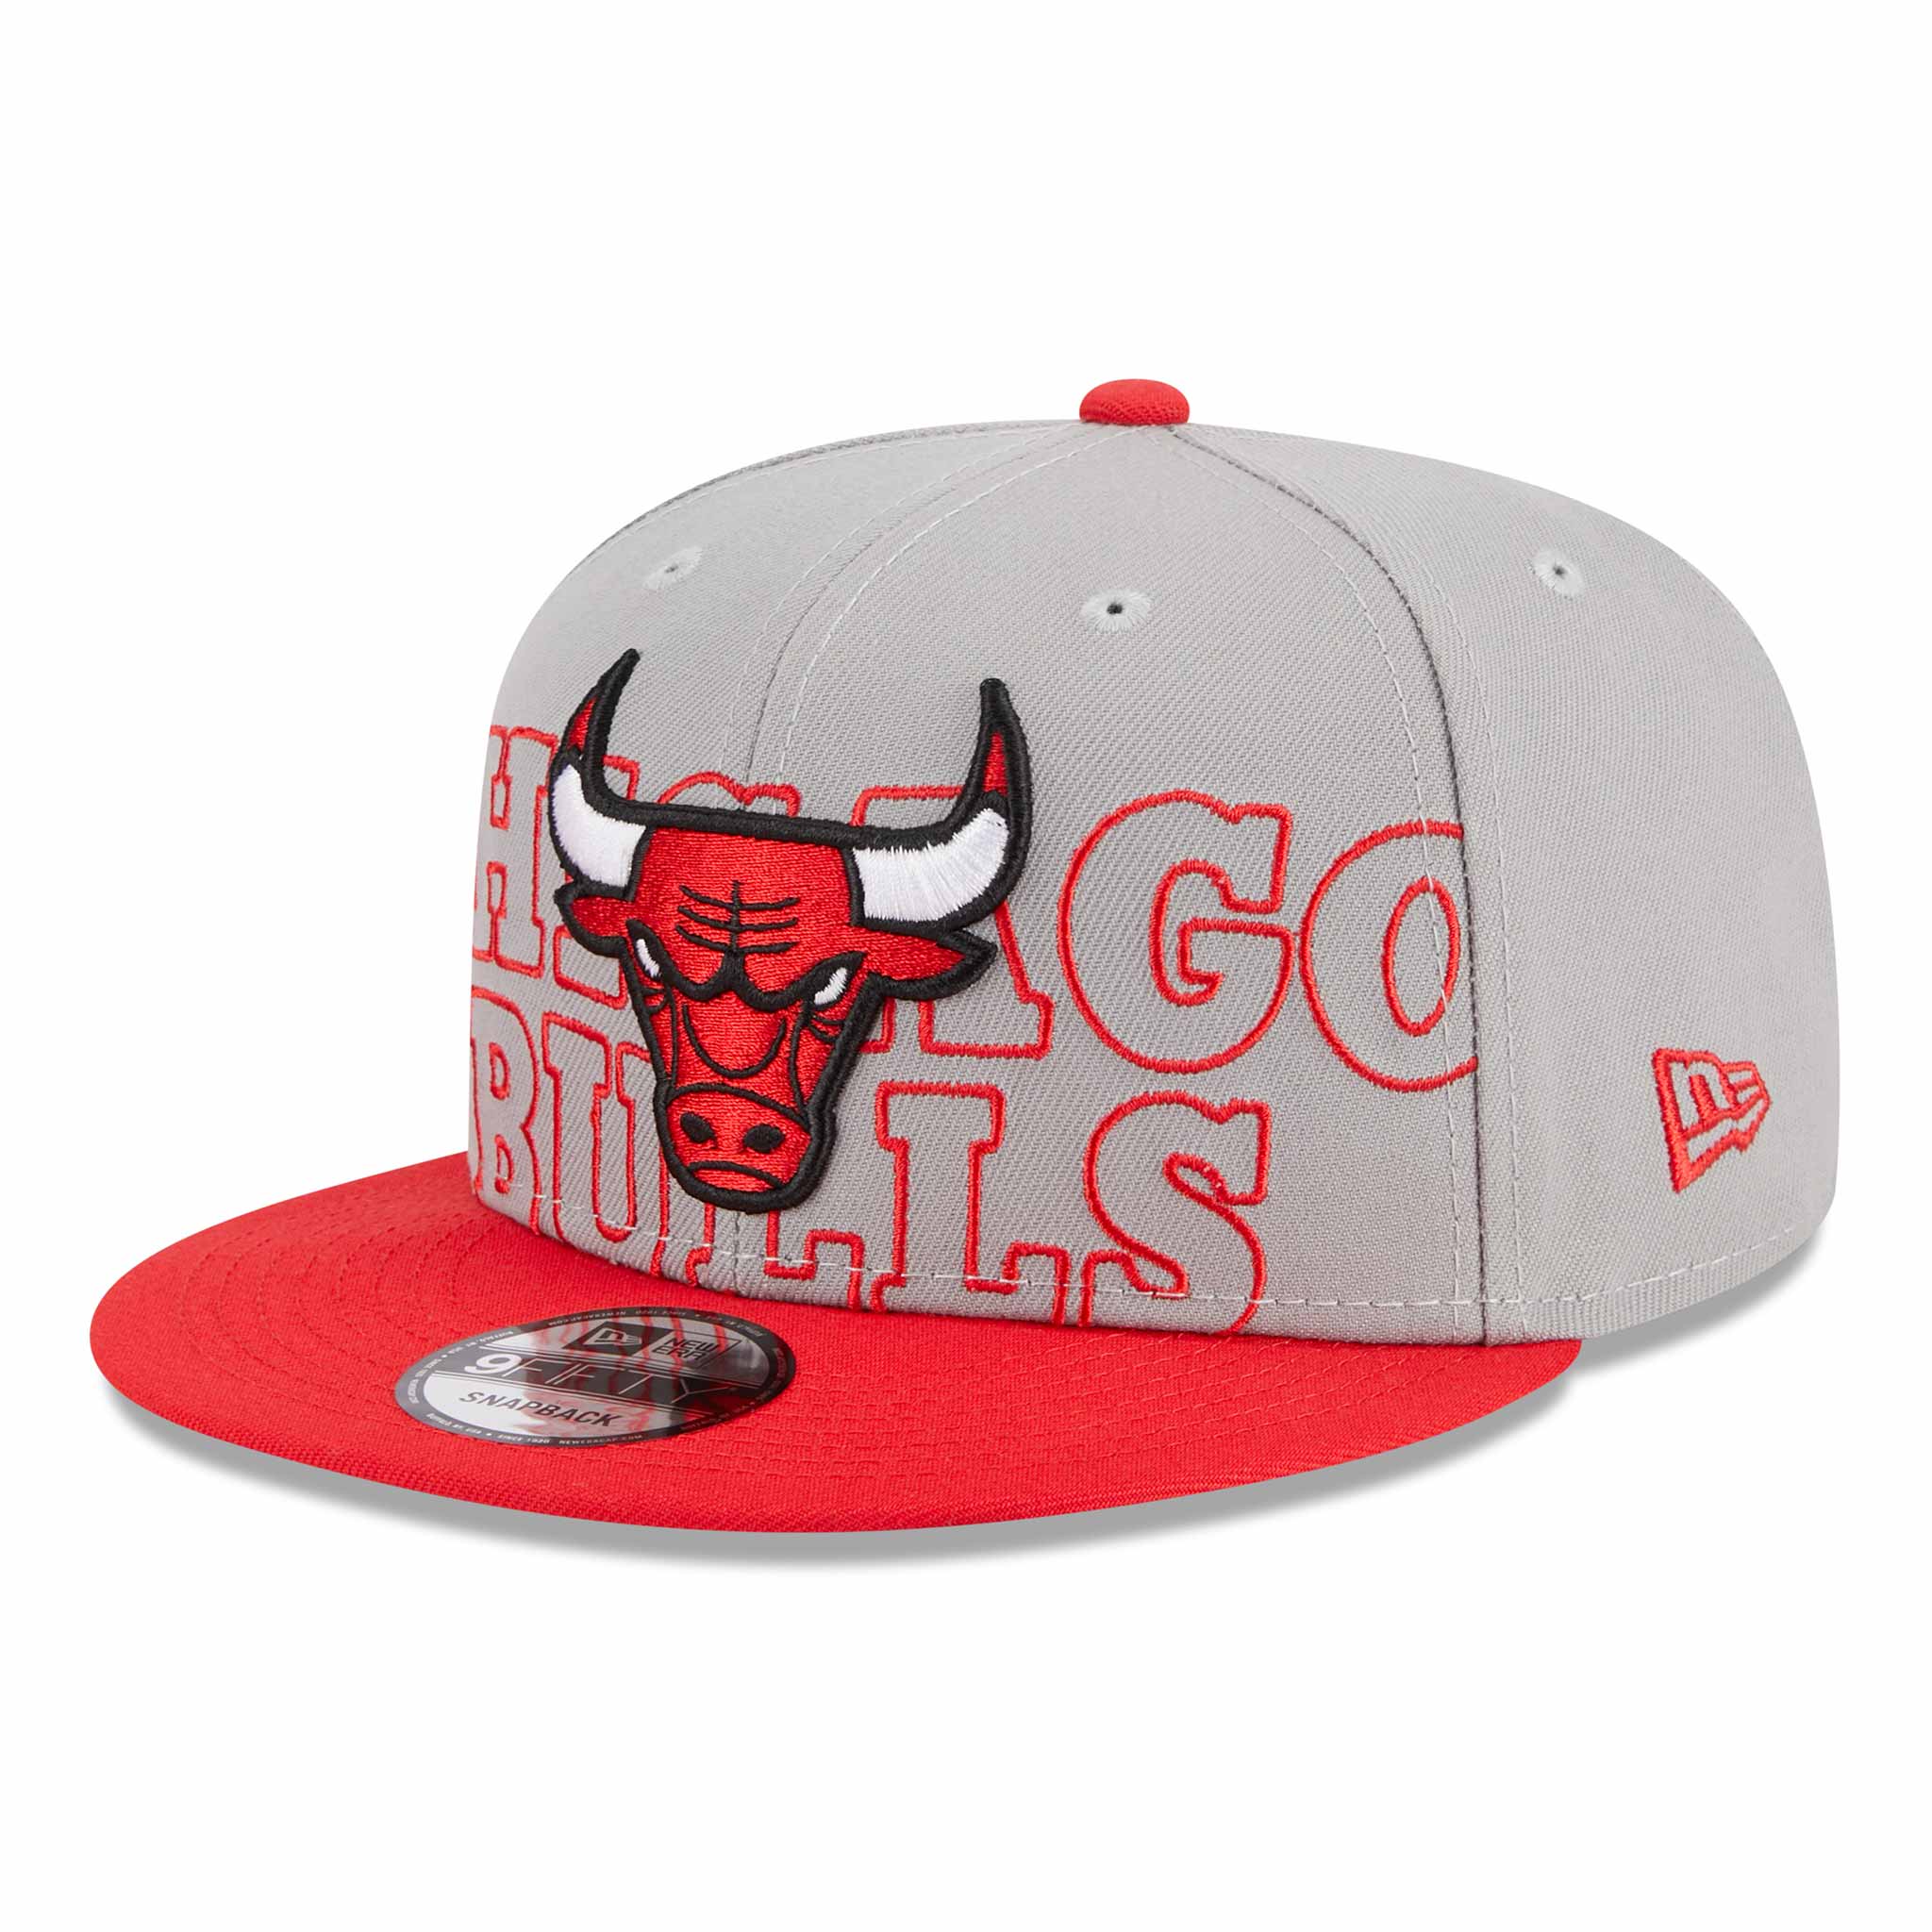 Chicago Bulls New Era The Golfer Corduroy 9FIFTY Snapback Hat - Gray